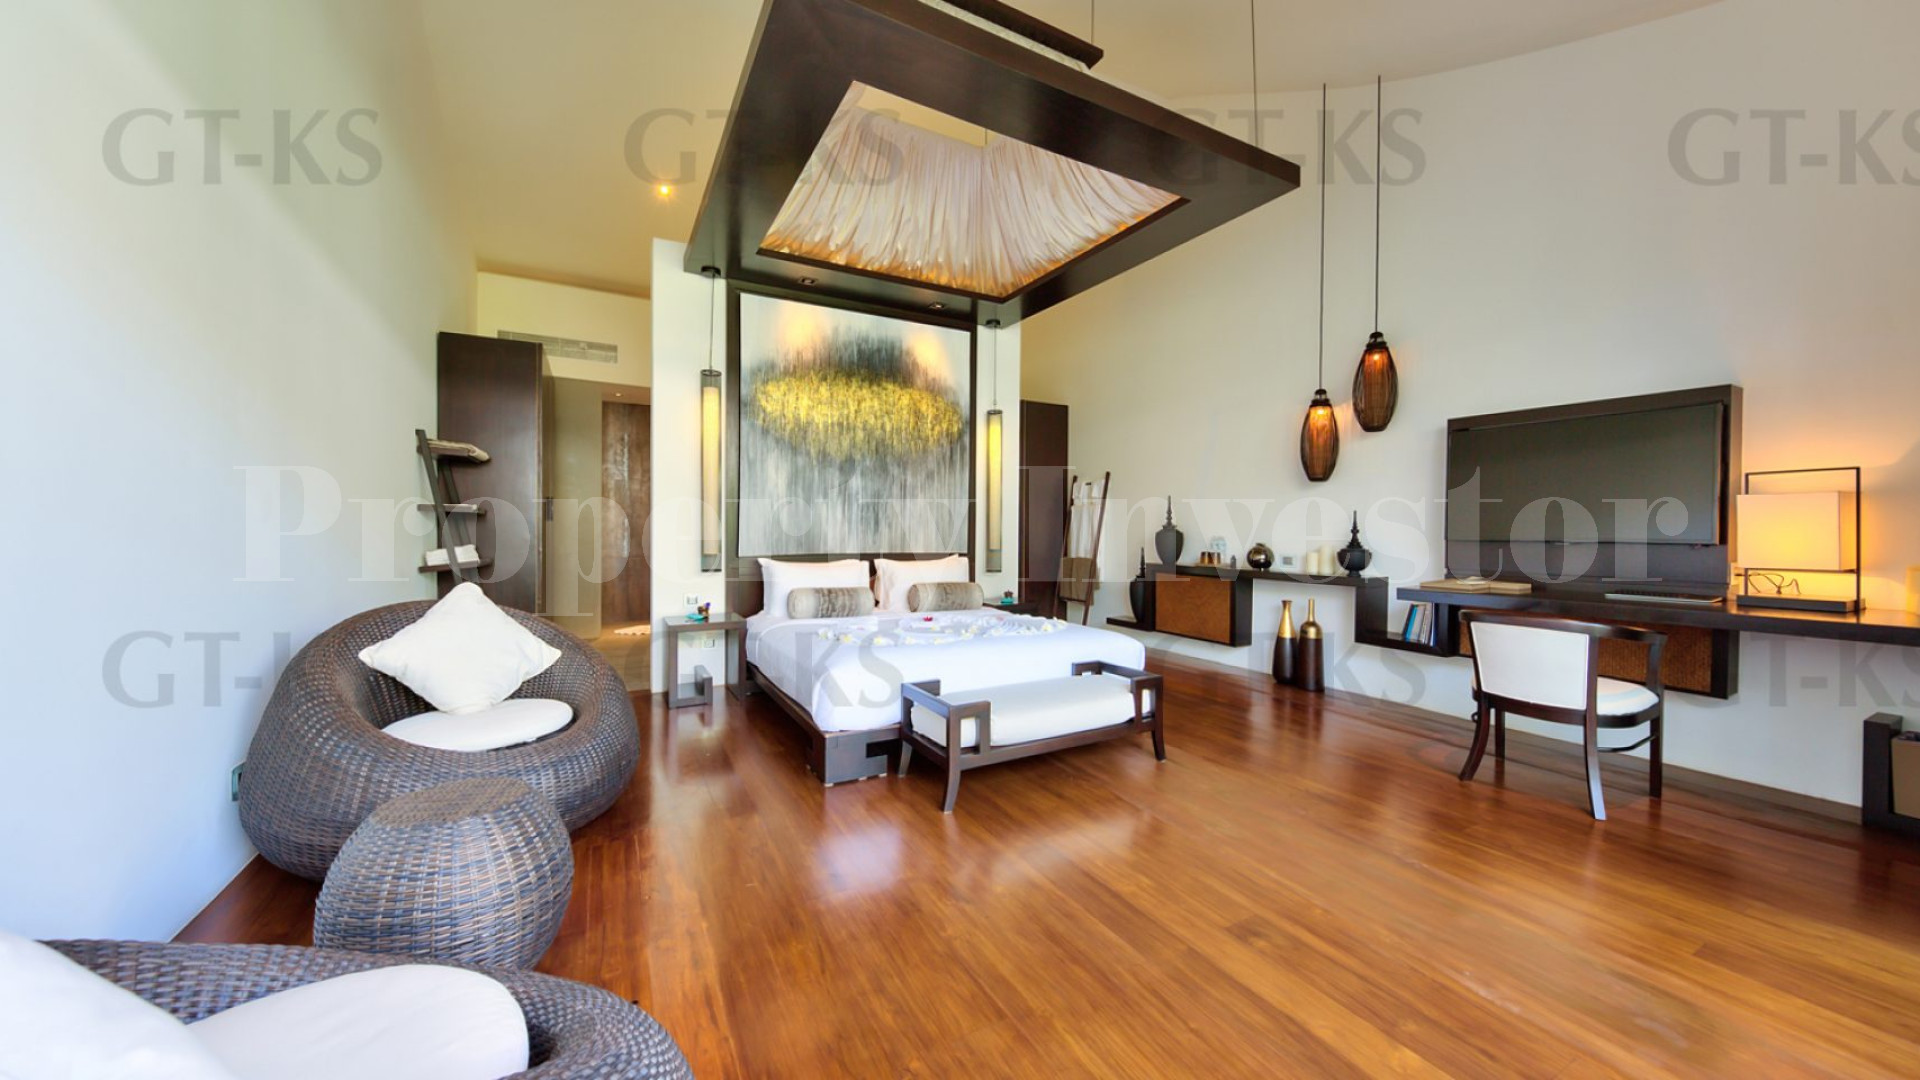 Unbelievable 5 Bedroom Luxury Beachfront Contemporary Thai Villa for Sale in Koh Samui, Thailand